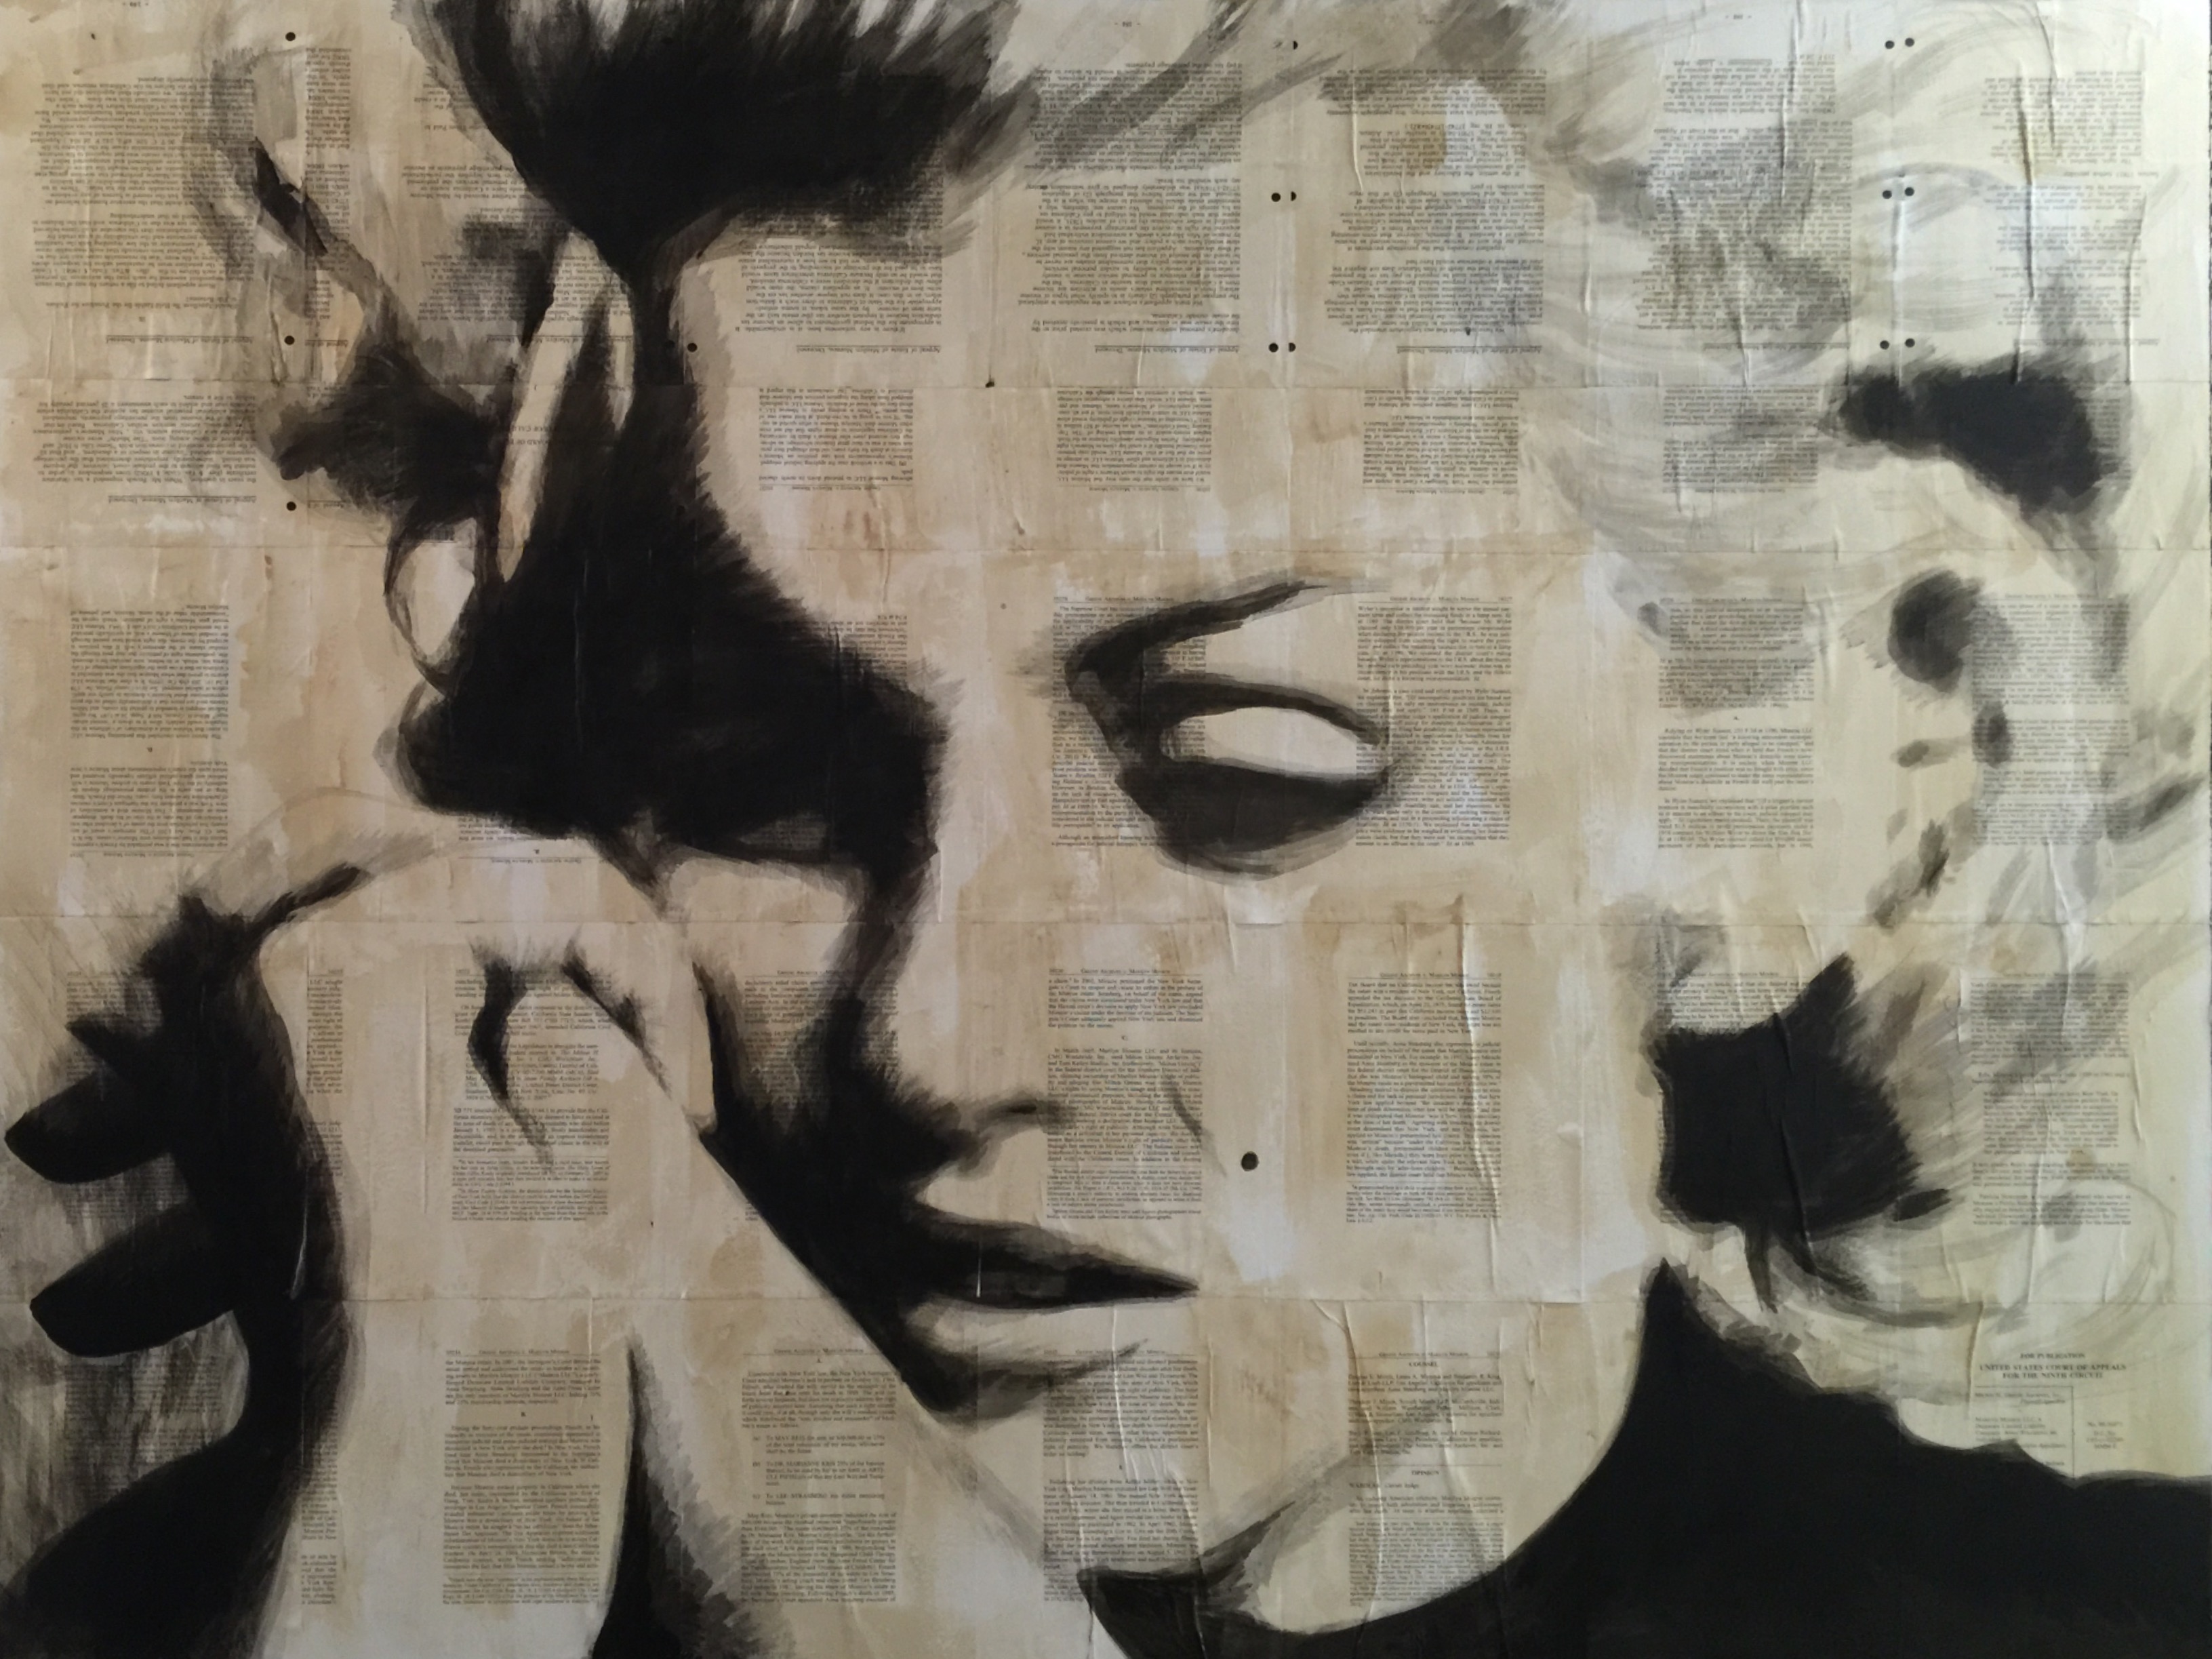 Exhibit 10: Marilyn Monroe